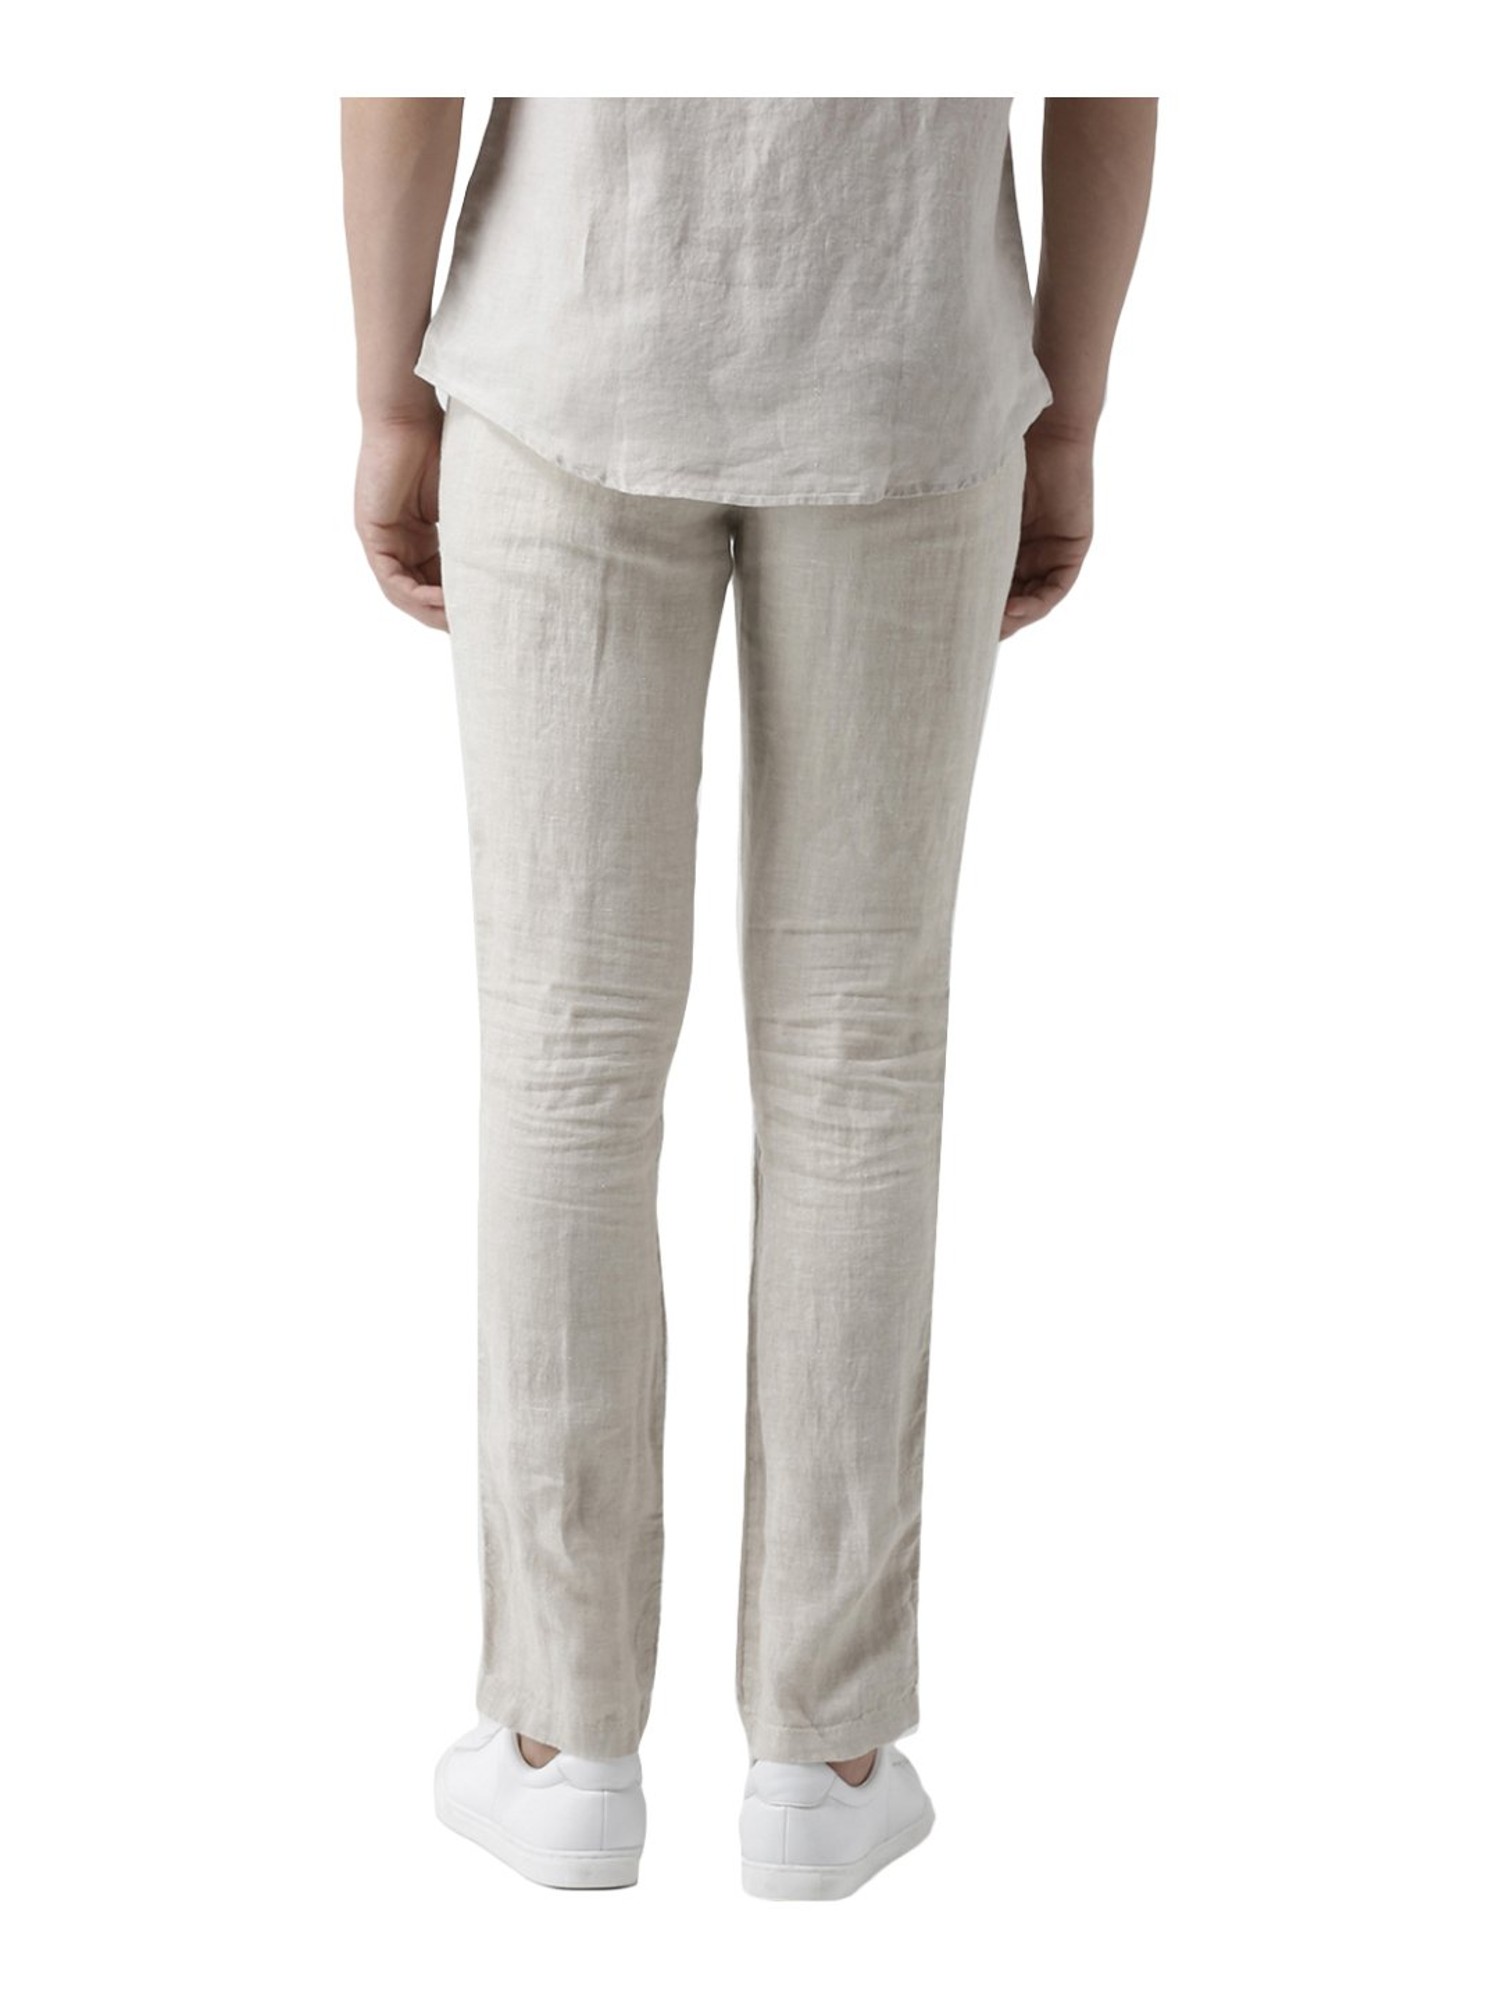 Buy Celio White Linen Slim Fit Trousers for Mens Online  Tata CLiQ